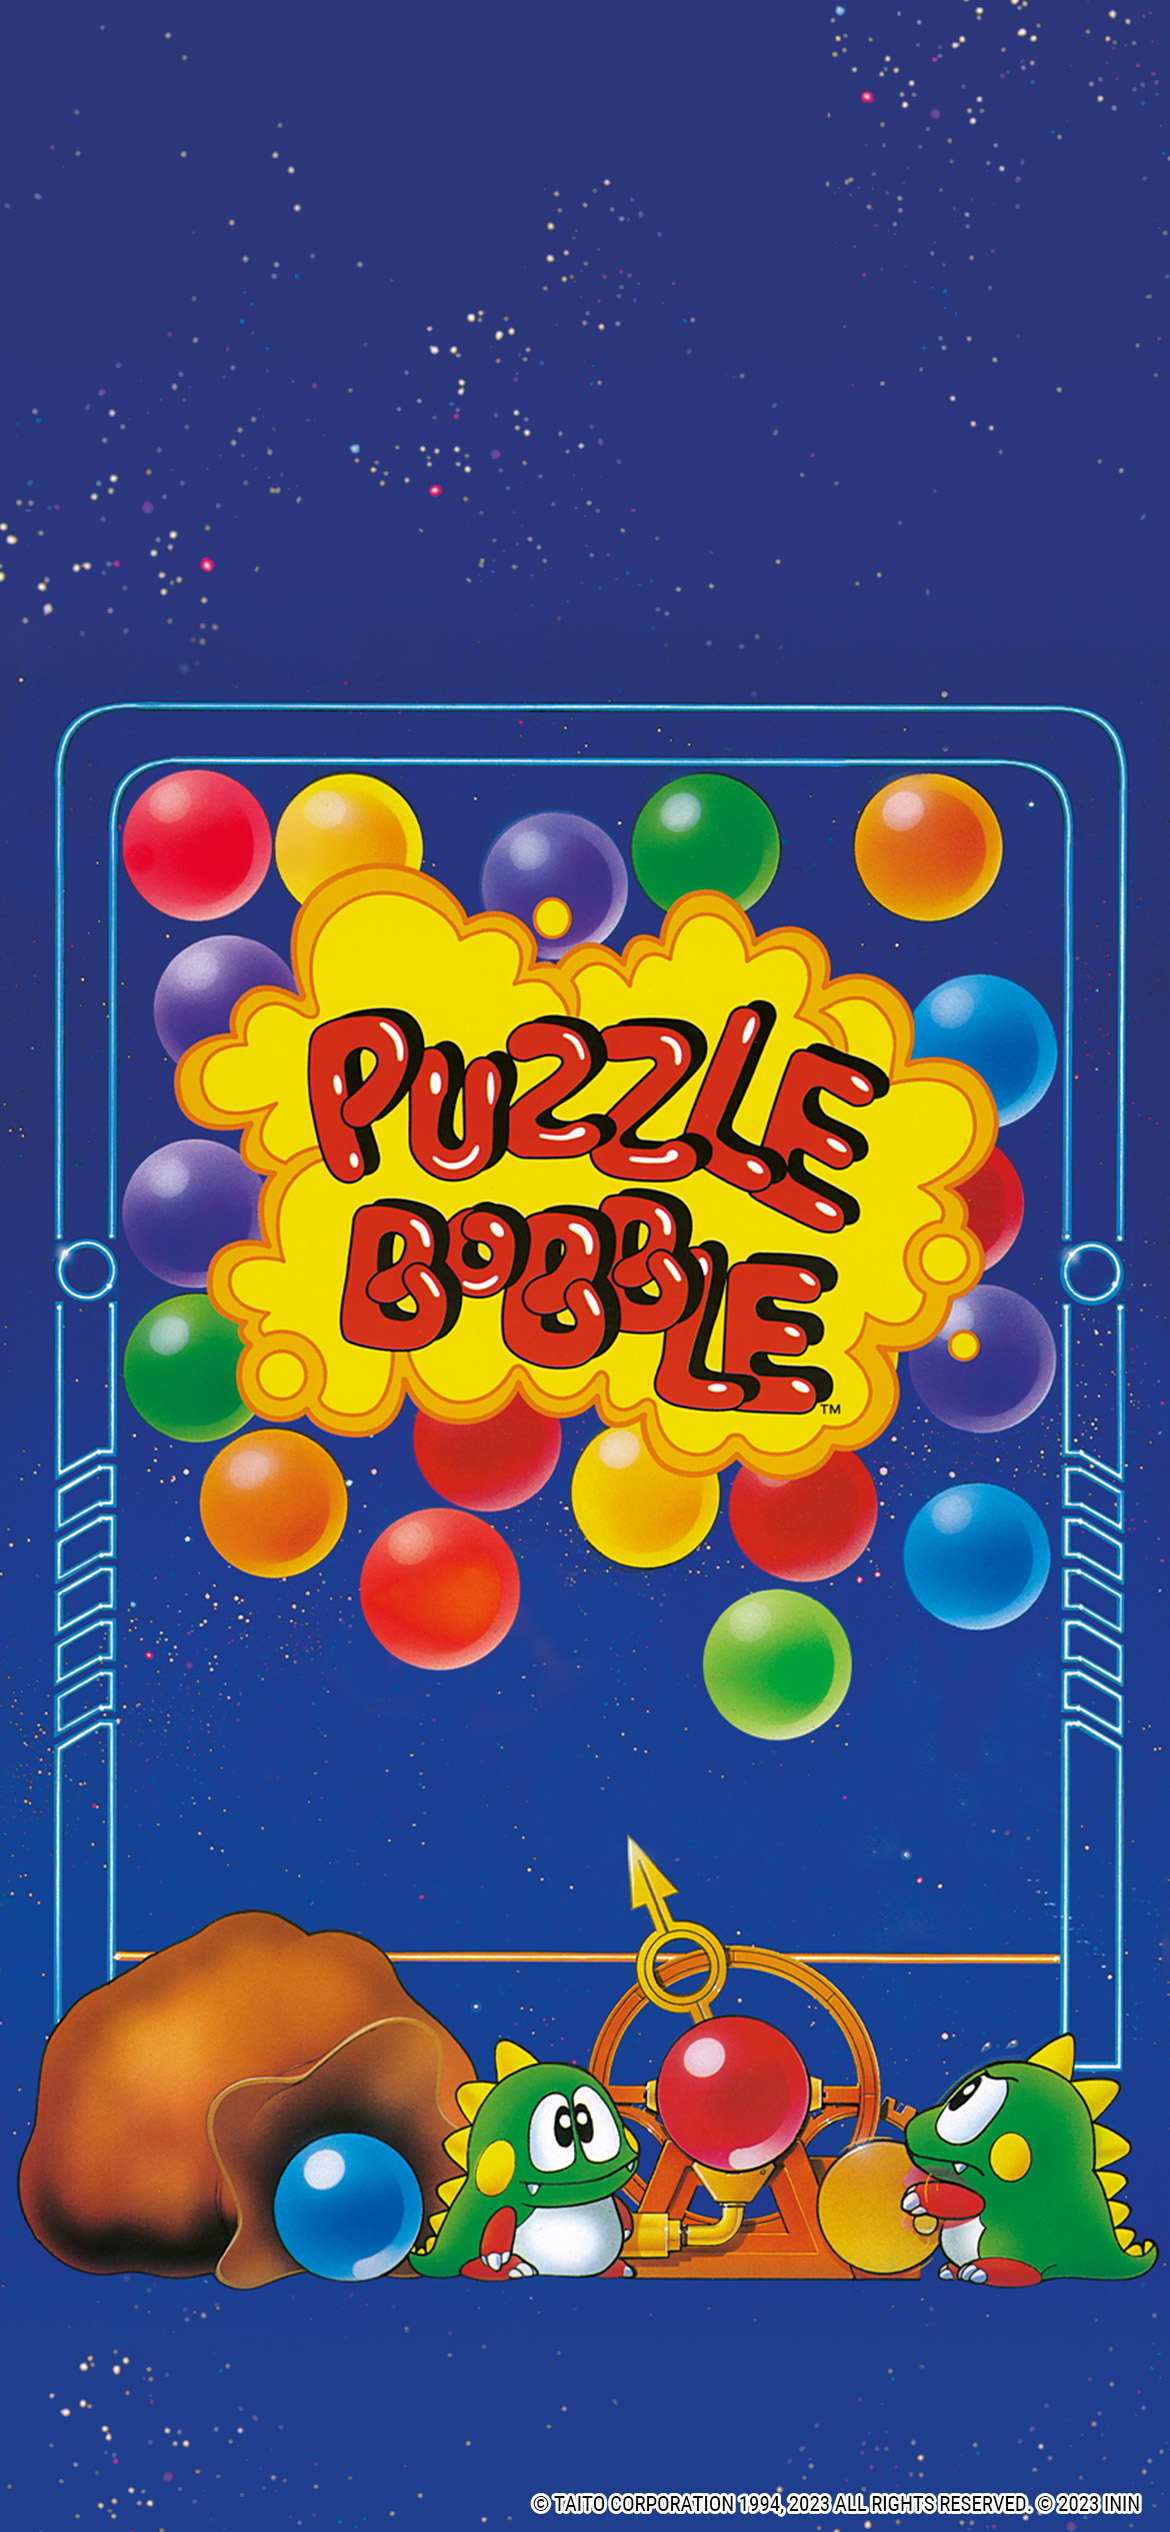 Puzzle Bobble Everybubble! - Meus Jogos